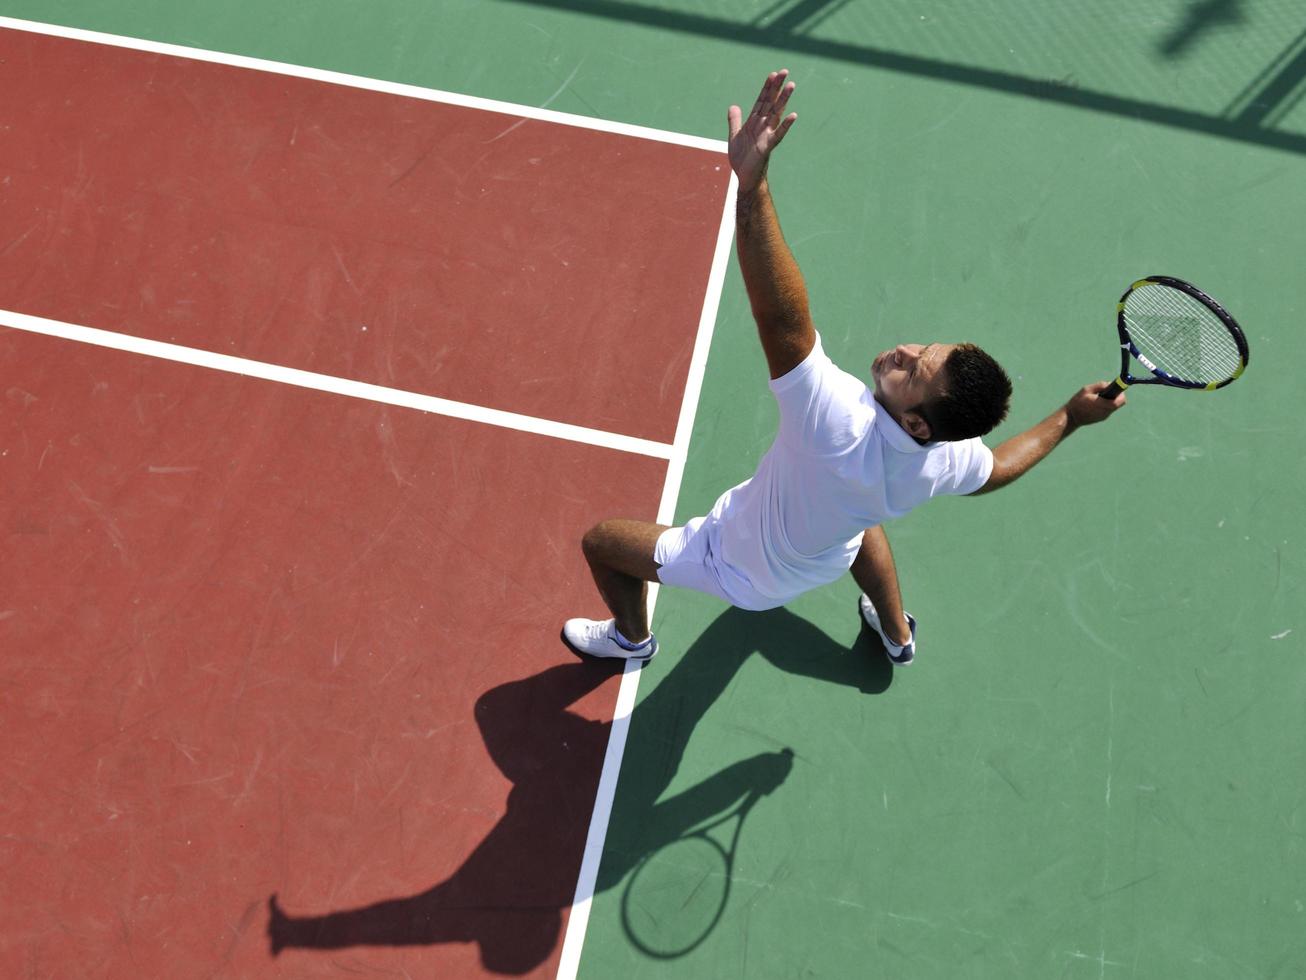 young man play tennis outdoor photo